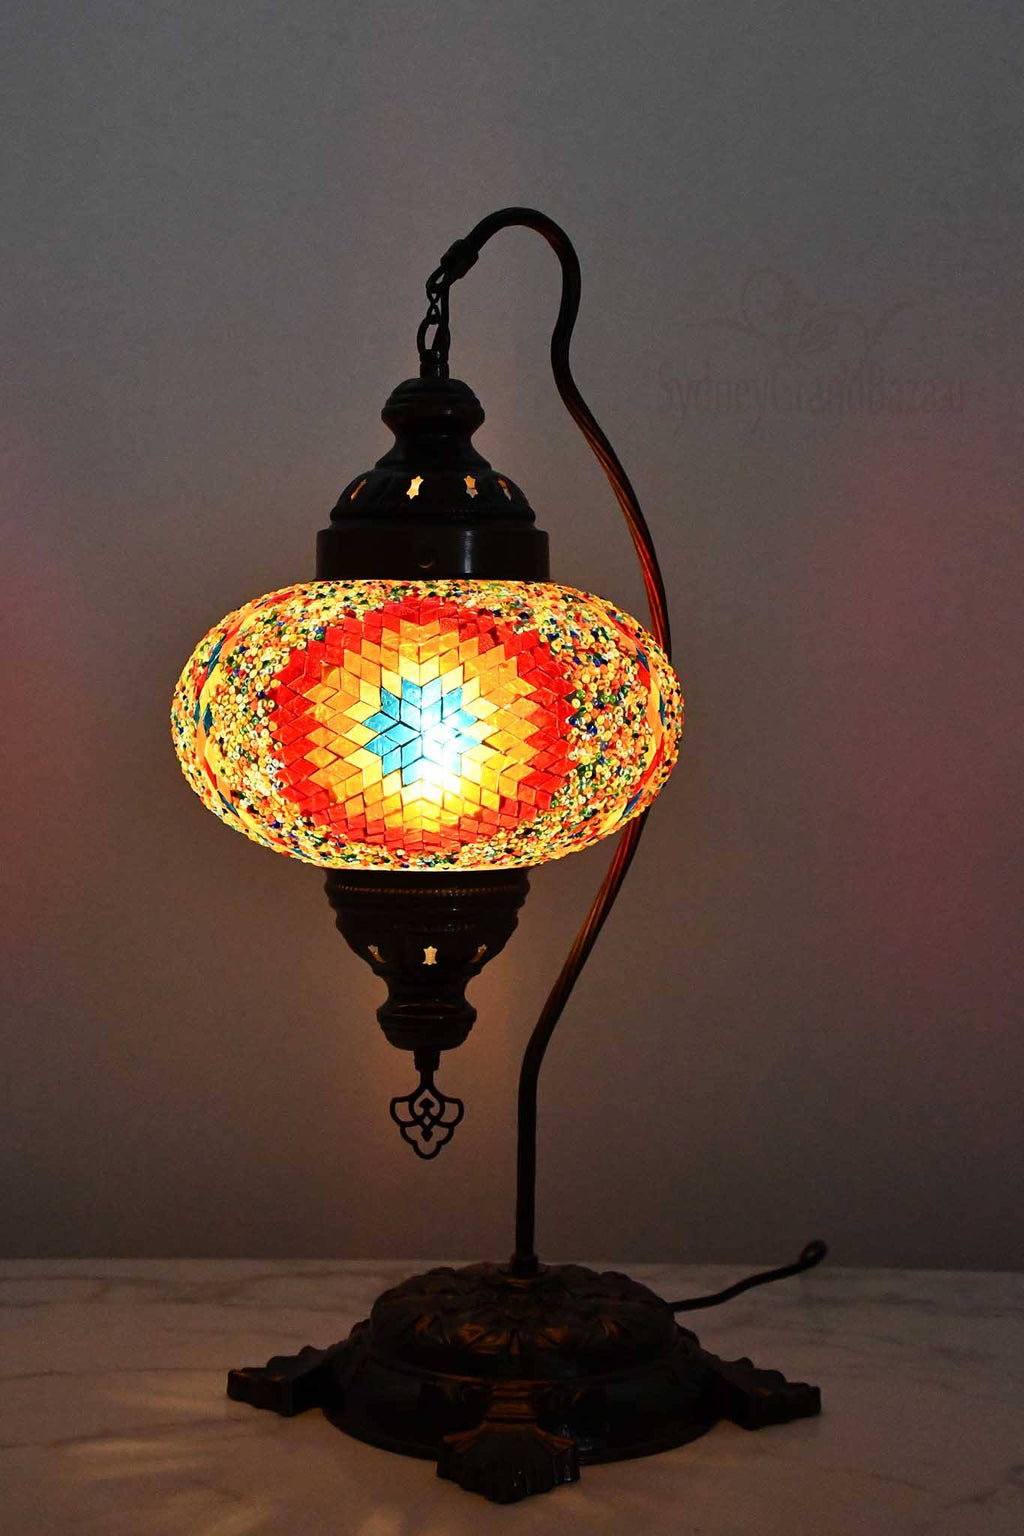 Turkish Lamp Large Star Rainbow Design 1 Lighting Sydney Grand Bazaar 